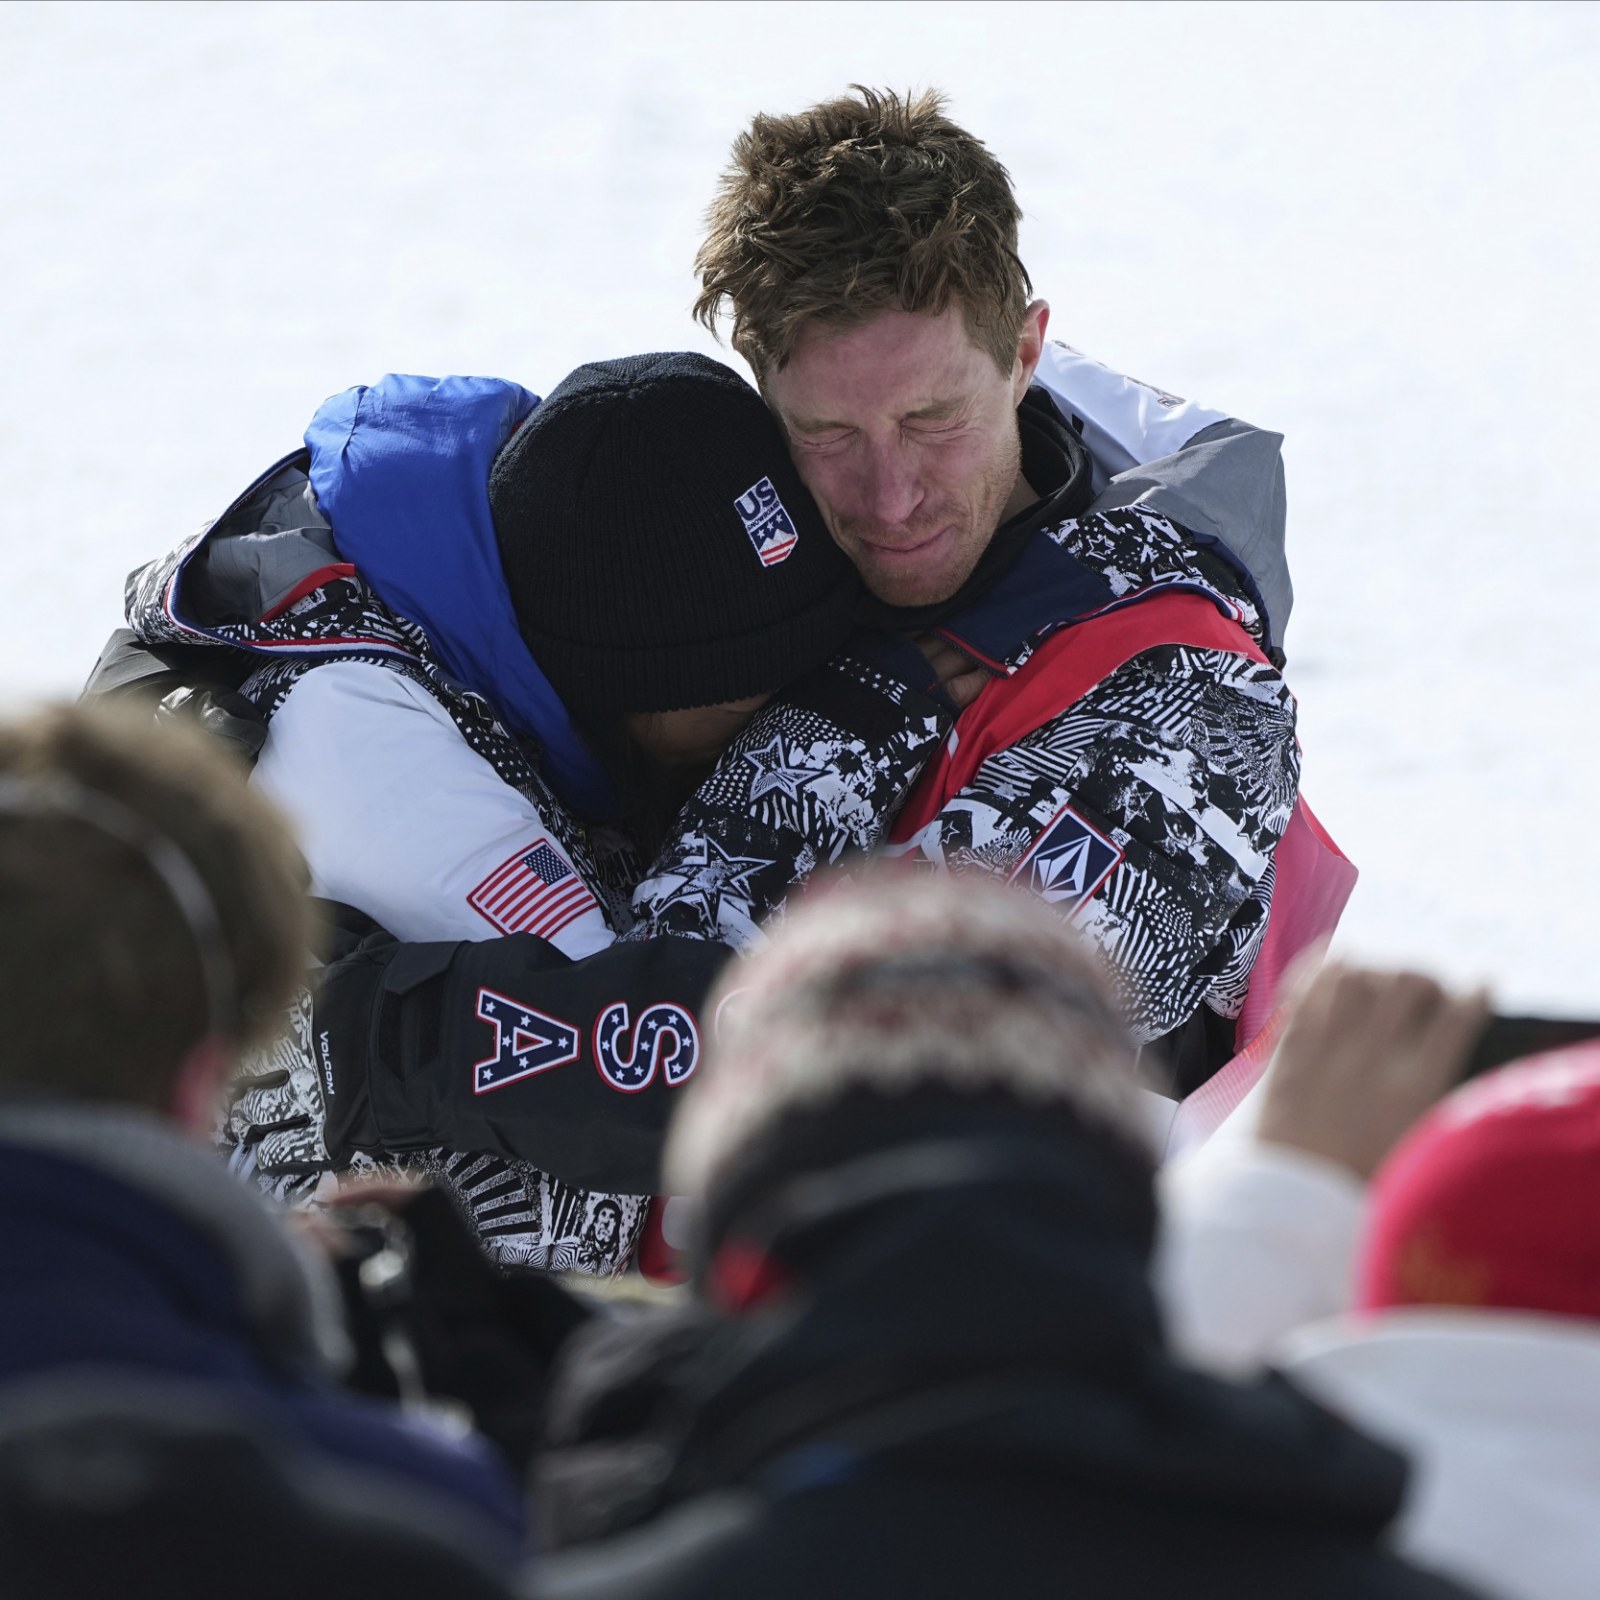 Shaun White Cries After Final Olympics Snowboarding Run in Beijing